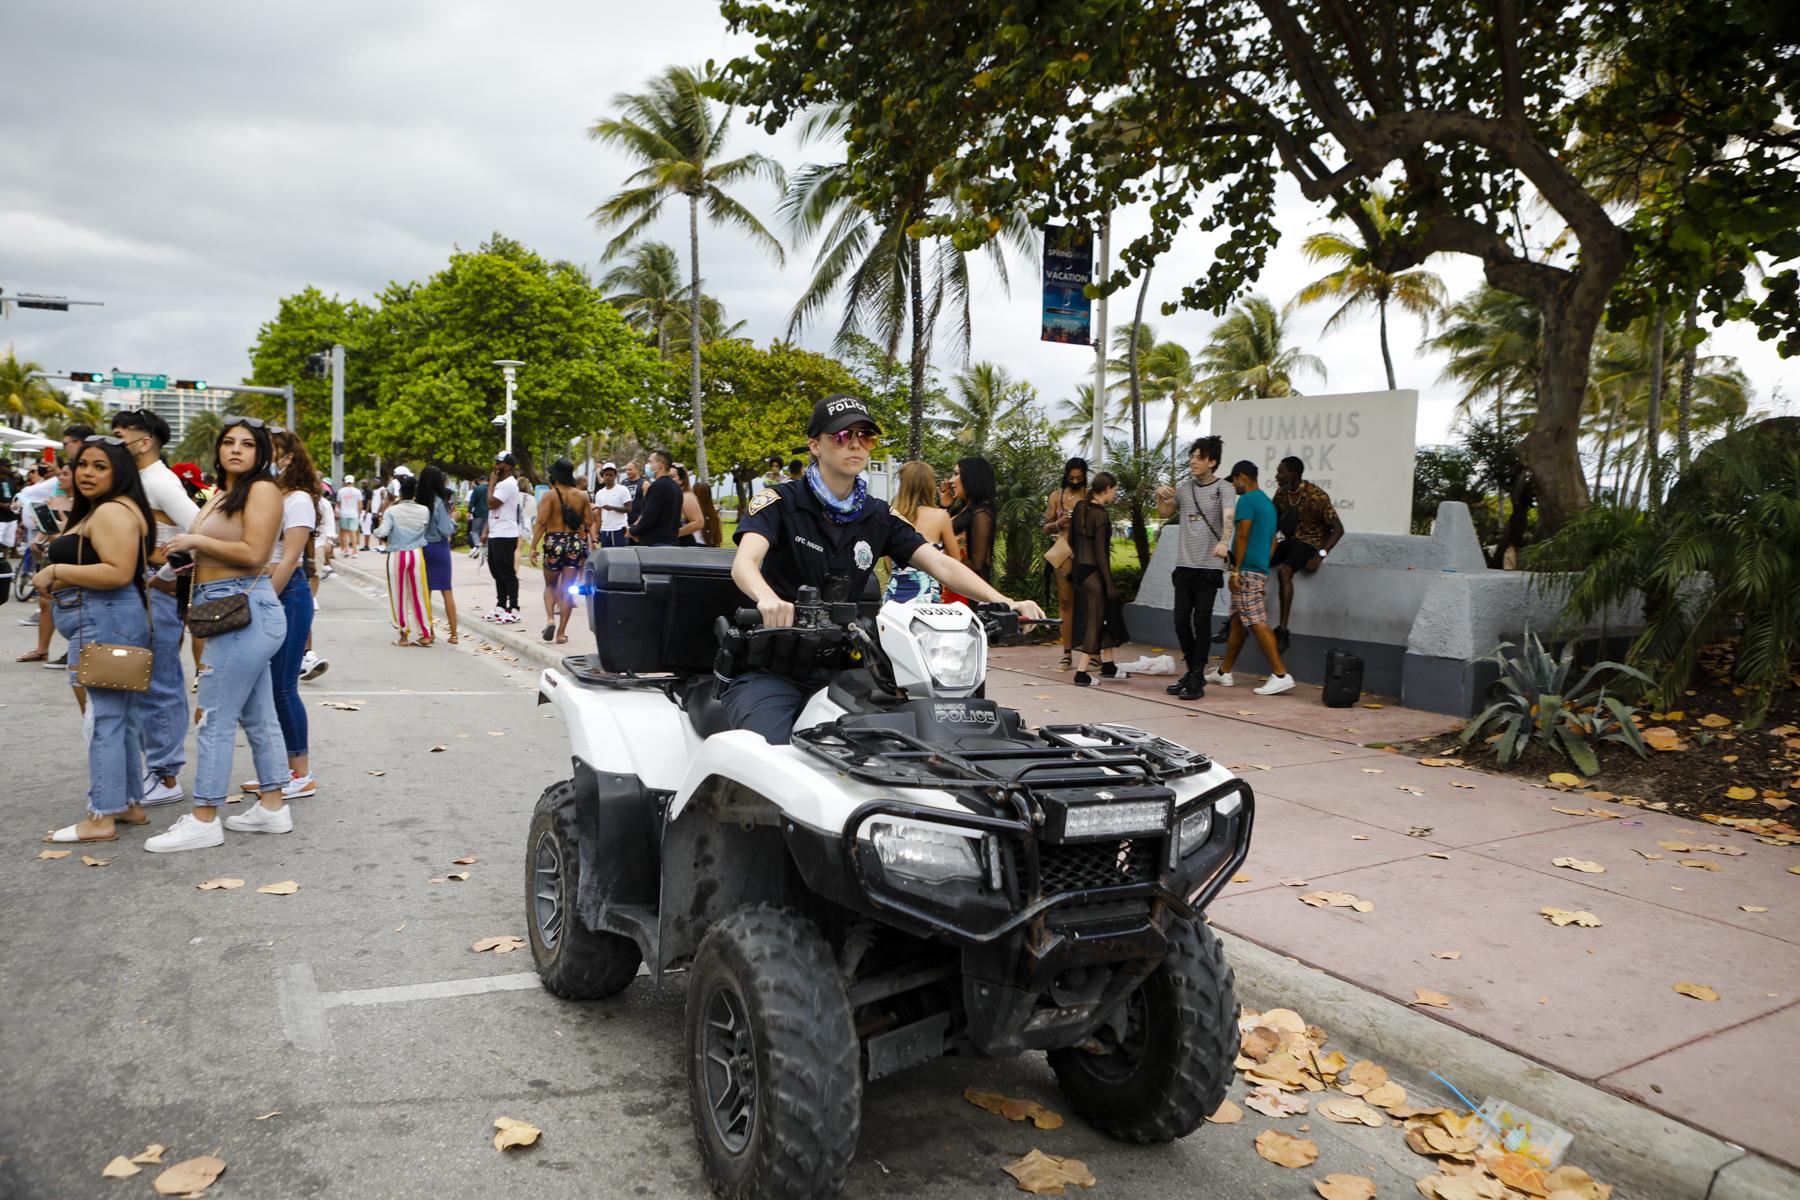 2021 Spring Break @ Miami Beach - A Miami Beach police officer patrols the street in Miami...